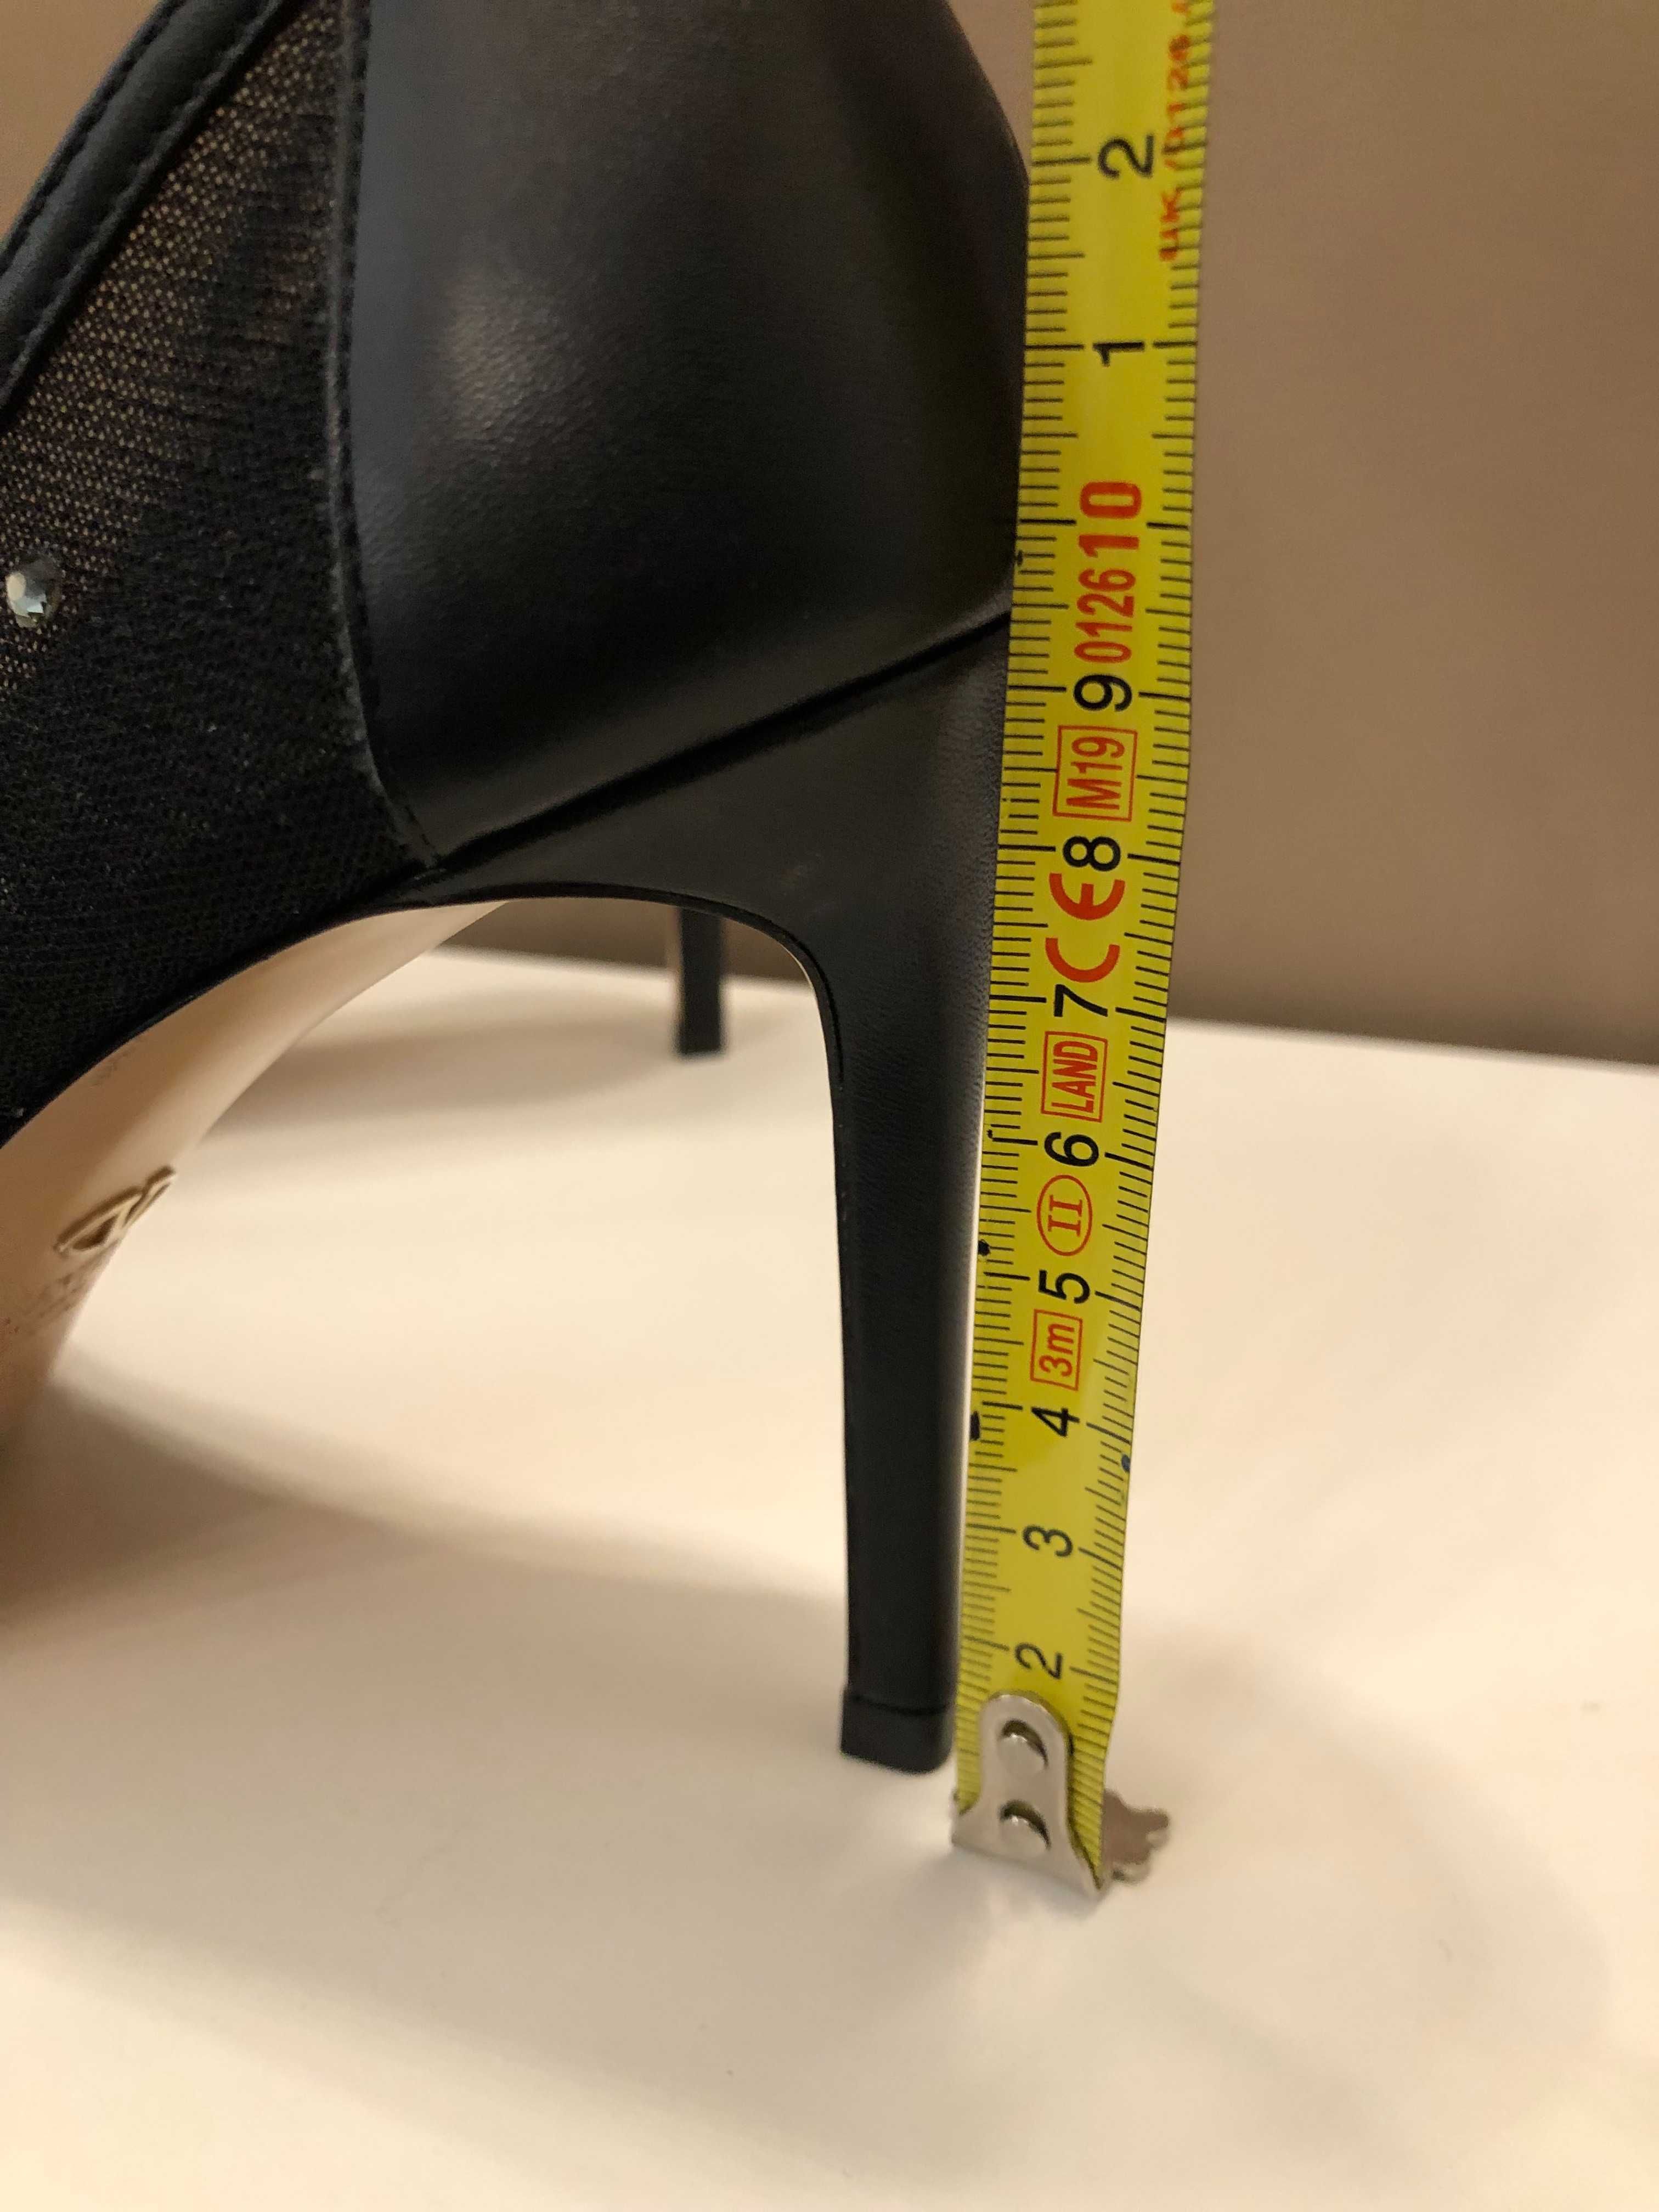 Valentino pantofi dama 39,5 full box, retail 790 euro